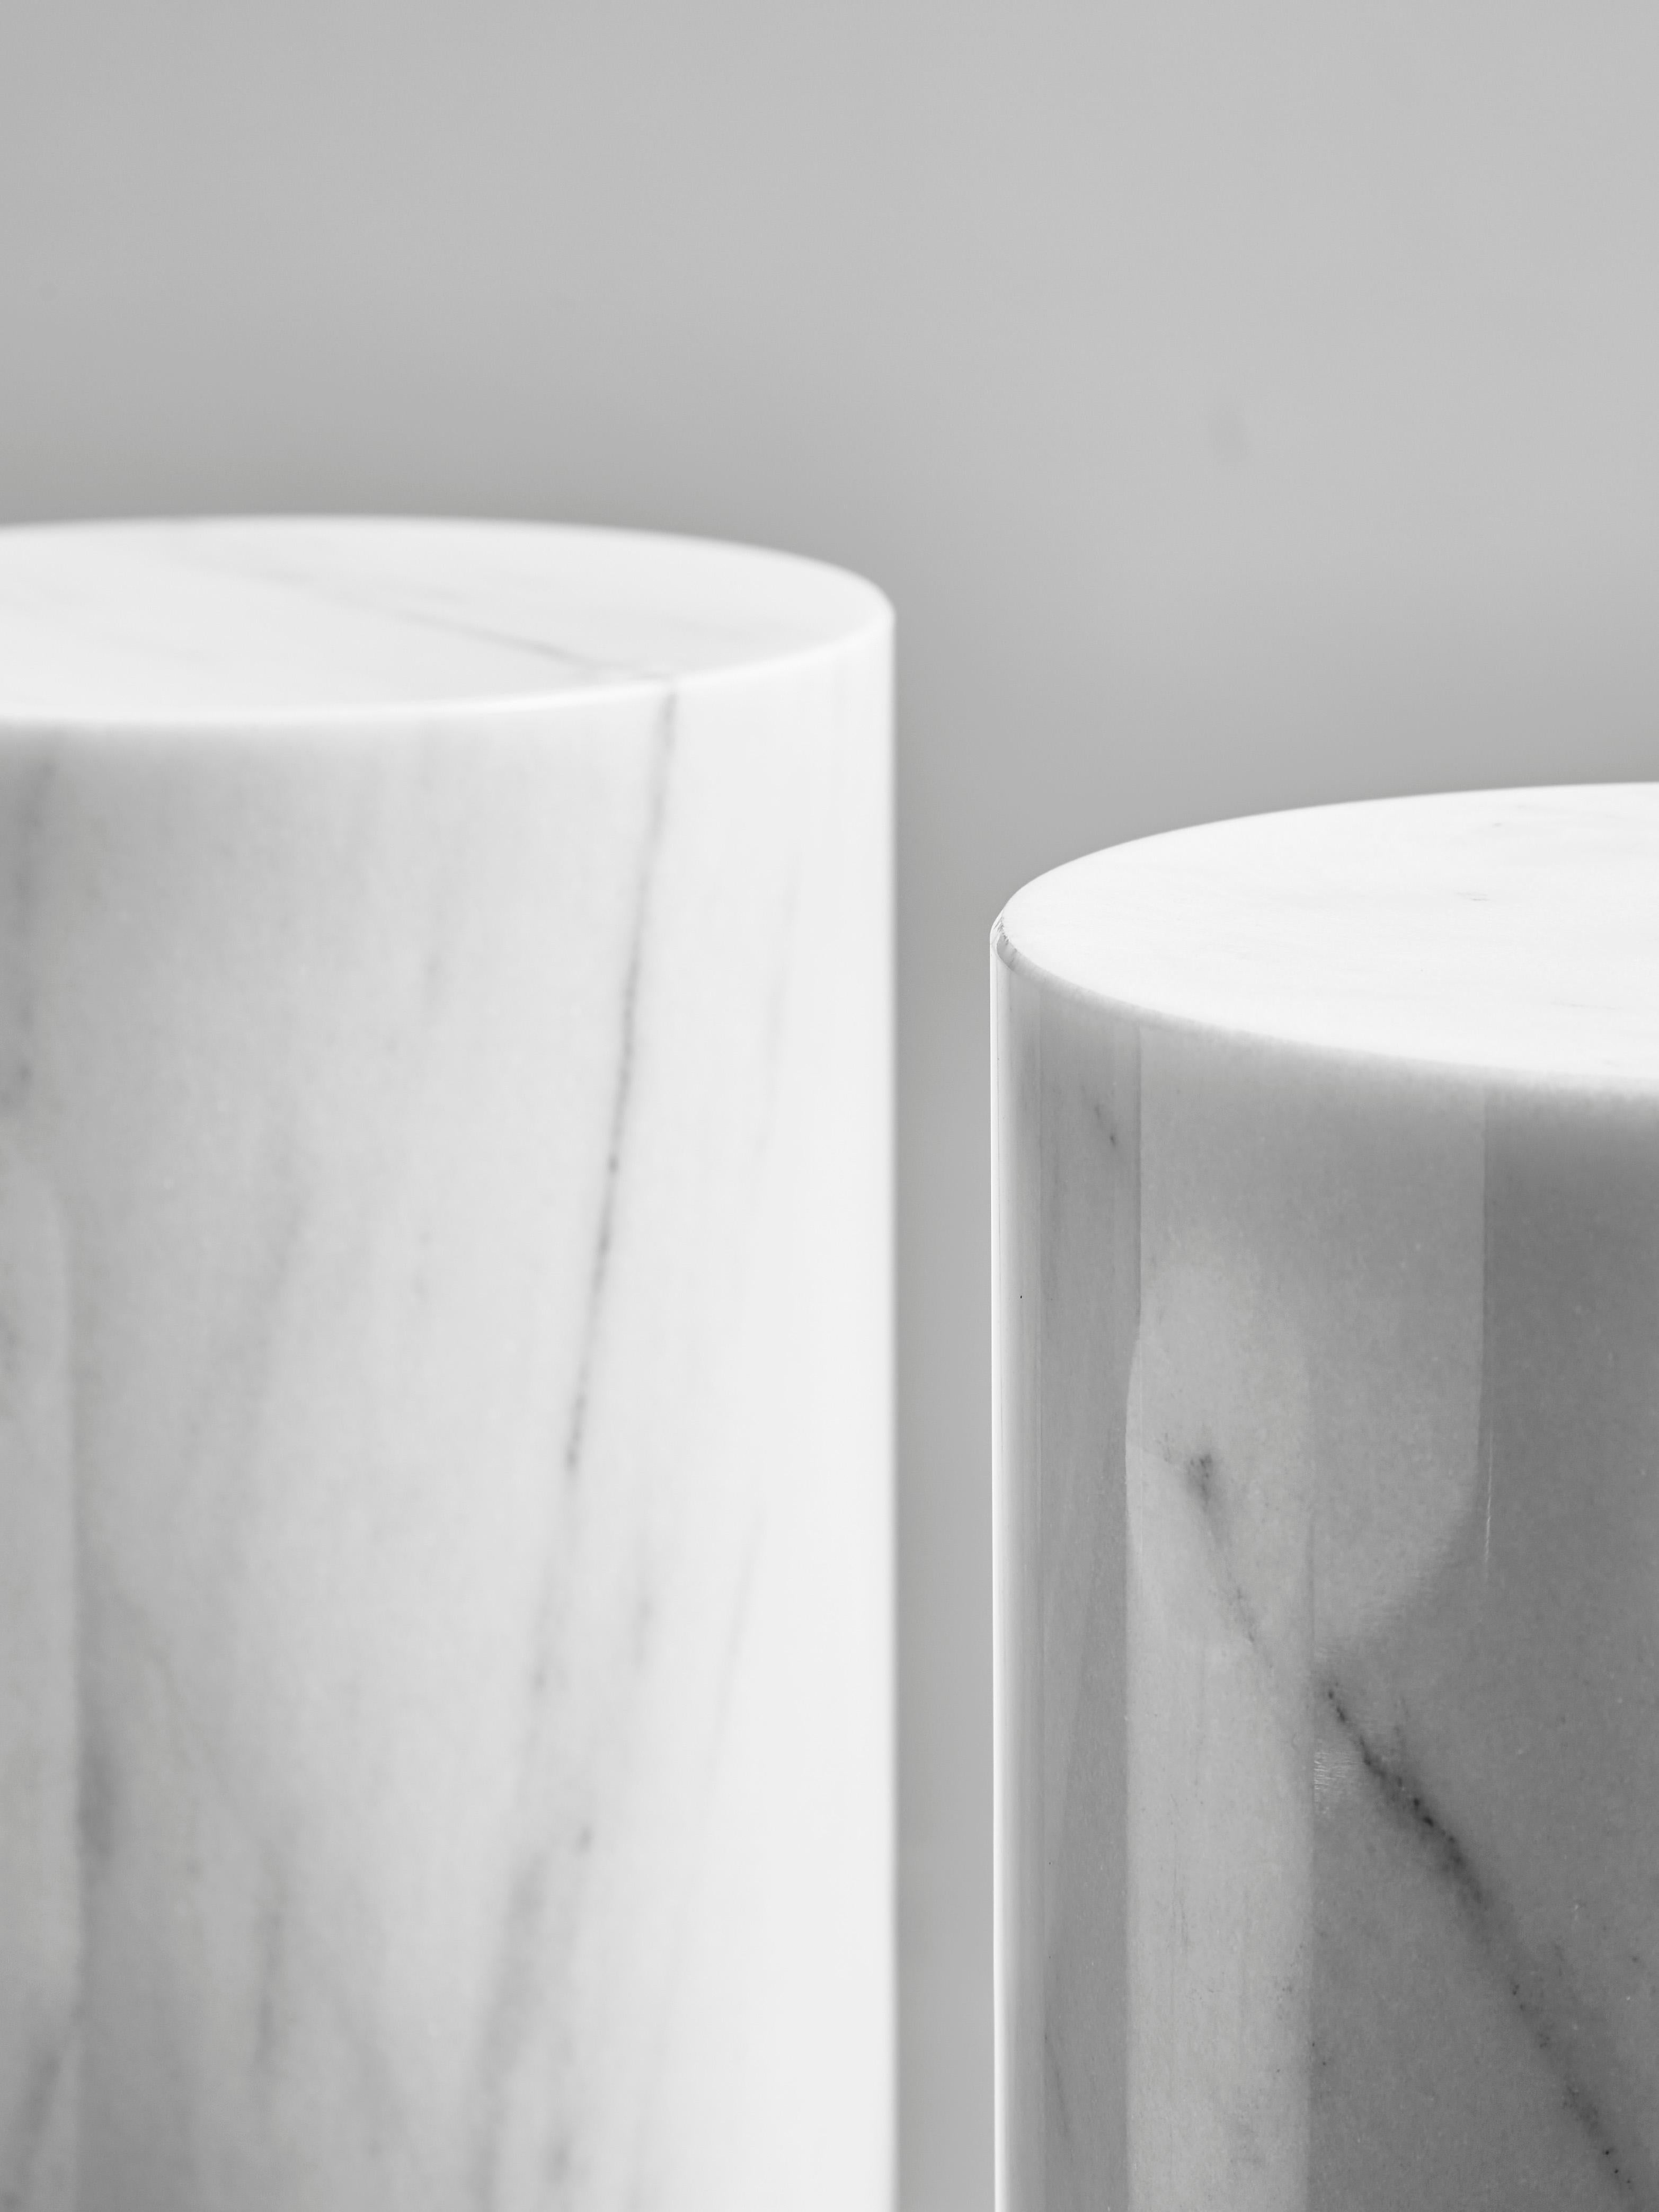 Elegant set of 3 pedestals in massive white marble from Carrara.
Creation by Studio Glustin.
France, 2017.
Dimensions: 
2 pedestals at ø 20 x H 58 cm
1 pedestal at ø 30 x H 43 cm.